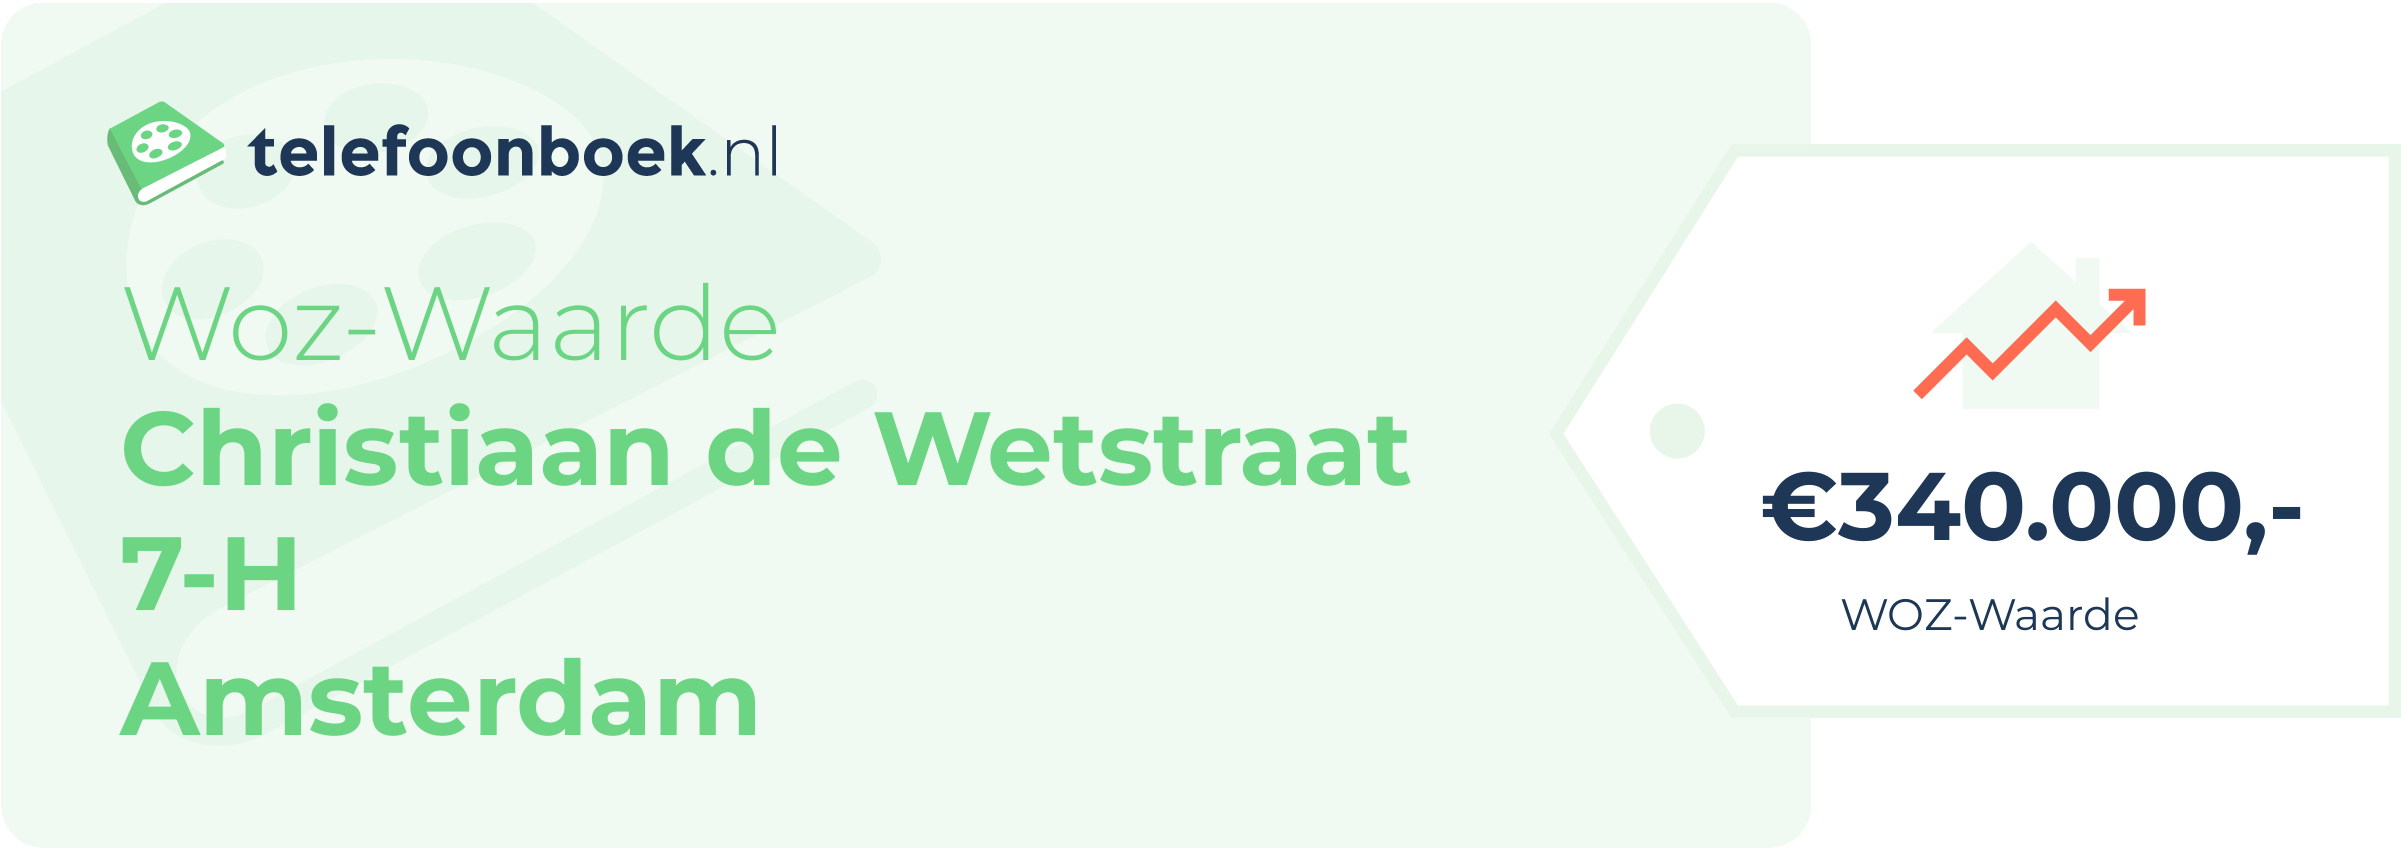 WOZ-waarde Christiaan De Wetstraat 7-H Amsterdam